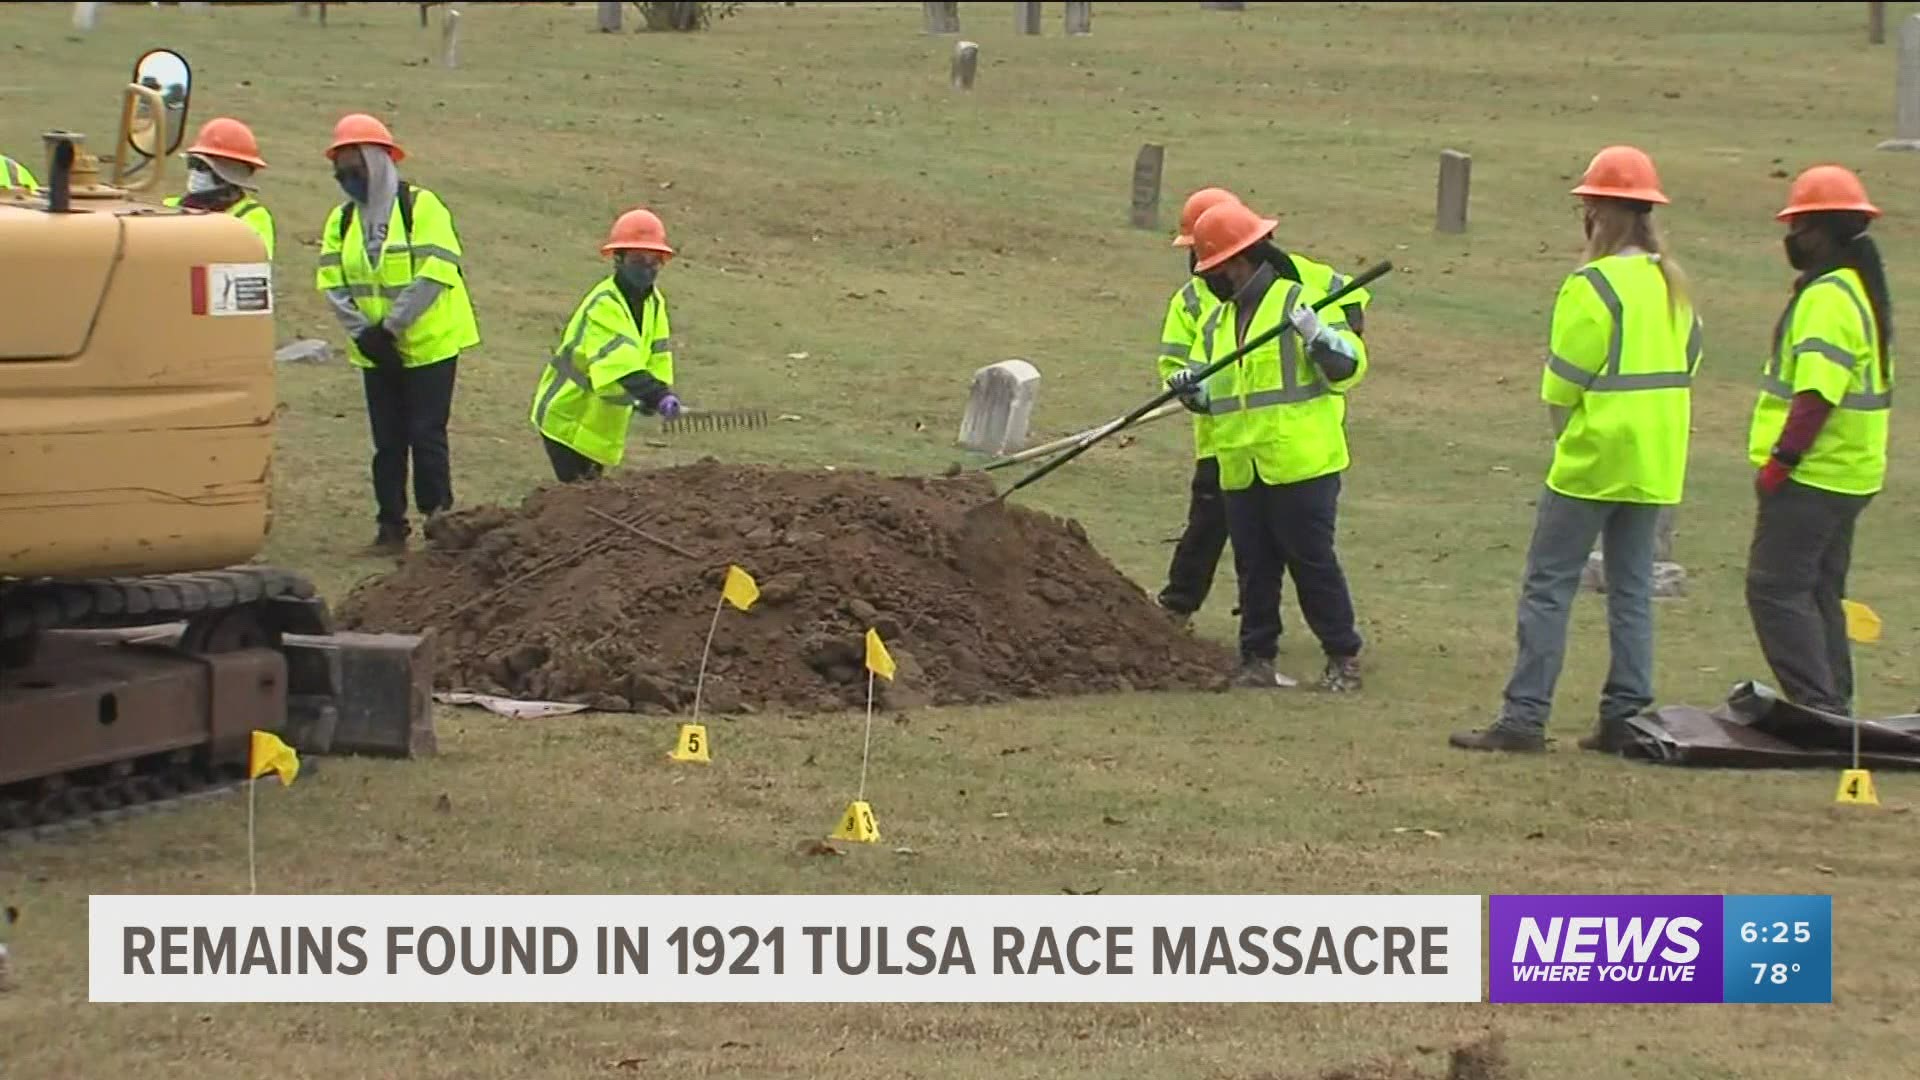 Remains found in 1921 Tulsa race massacre.